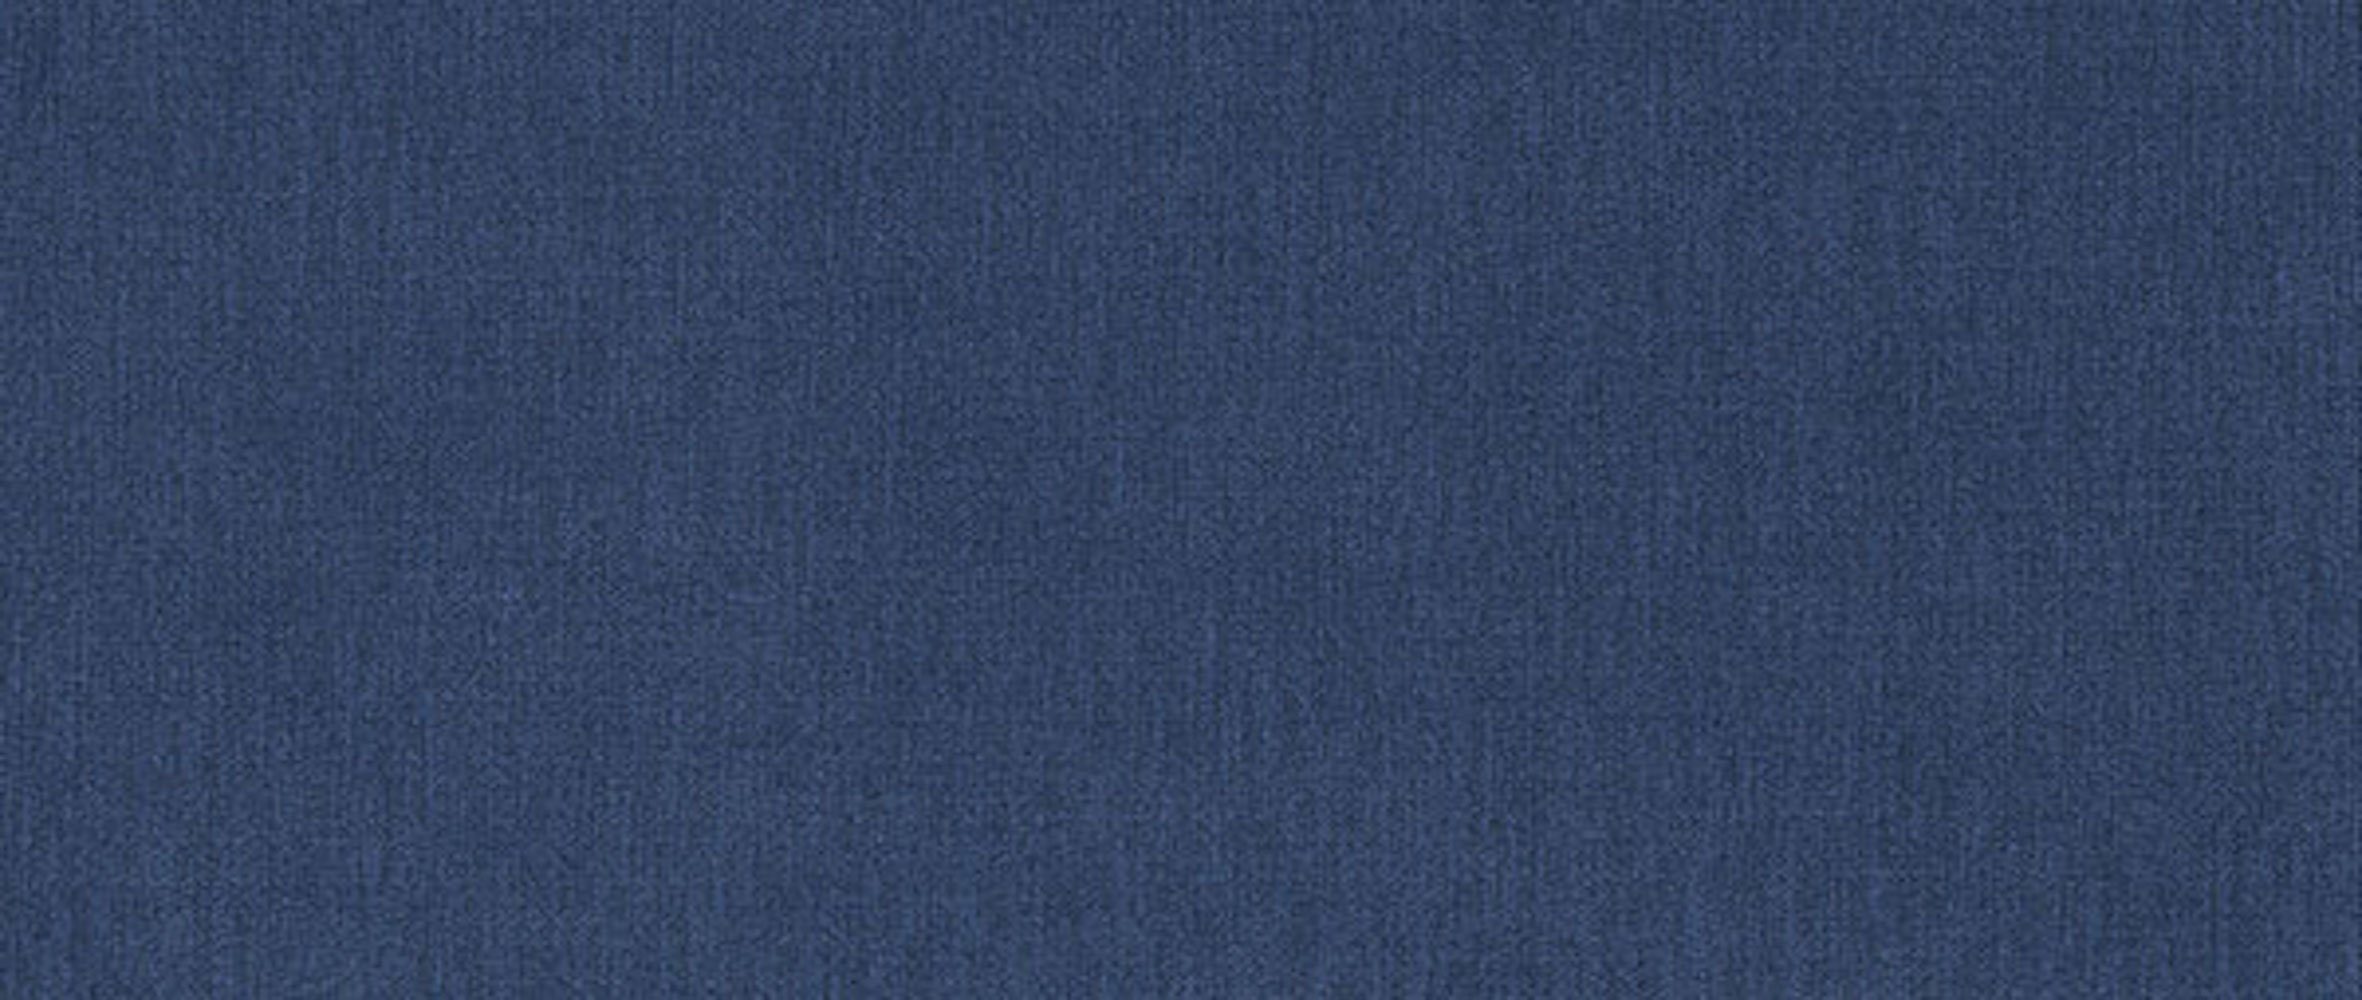 Wellenunterfederung wählbar 80) blau Farbe mit Feldmann-Wohnen (Orinoco Lira, 202cm Sofa